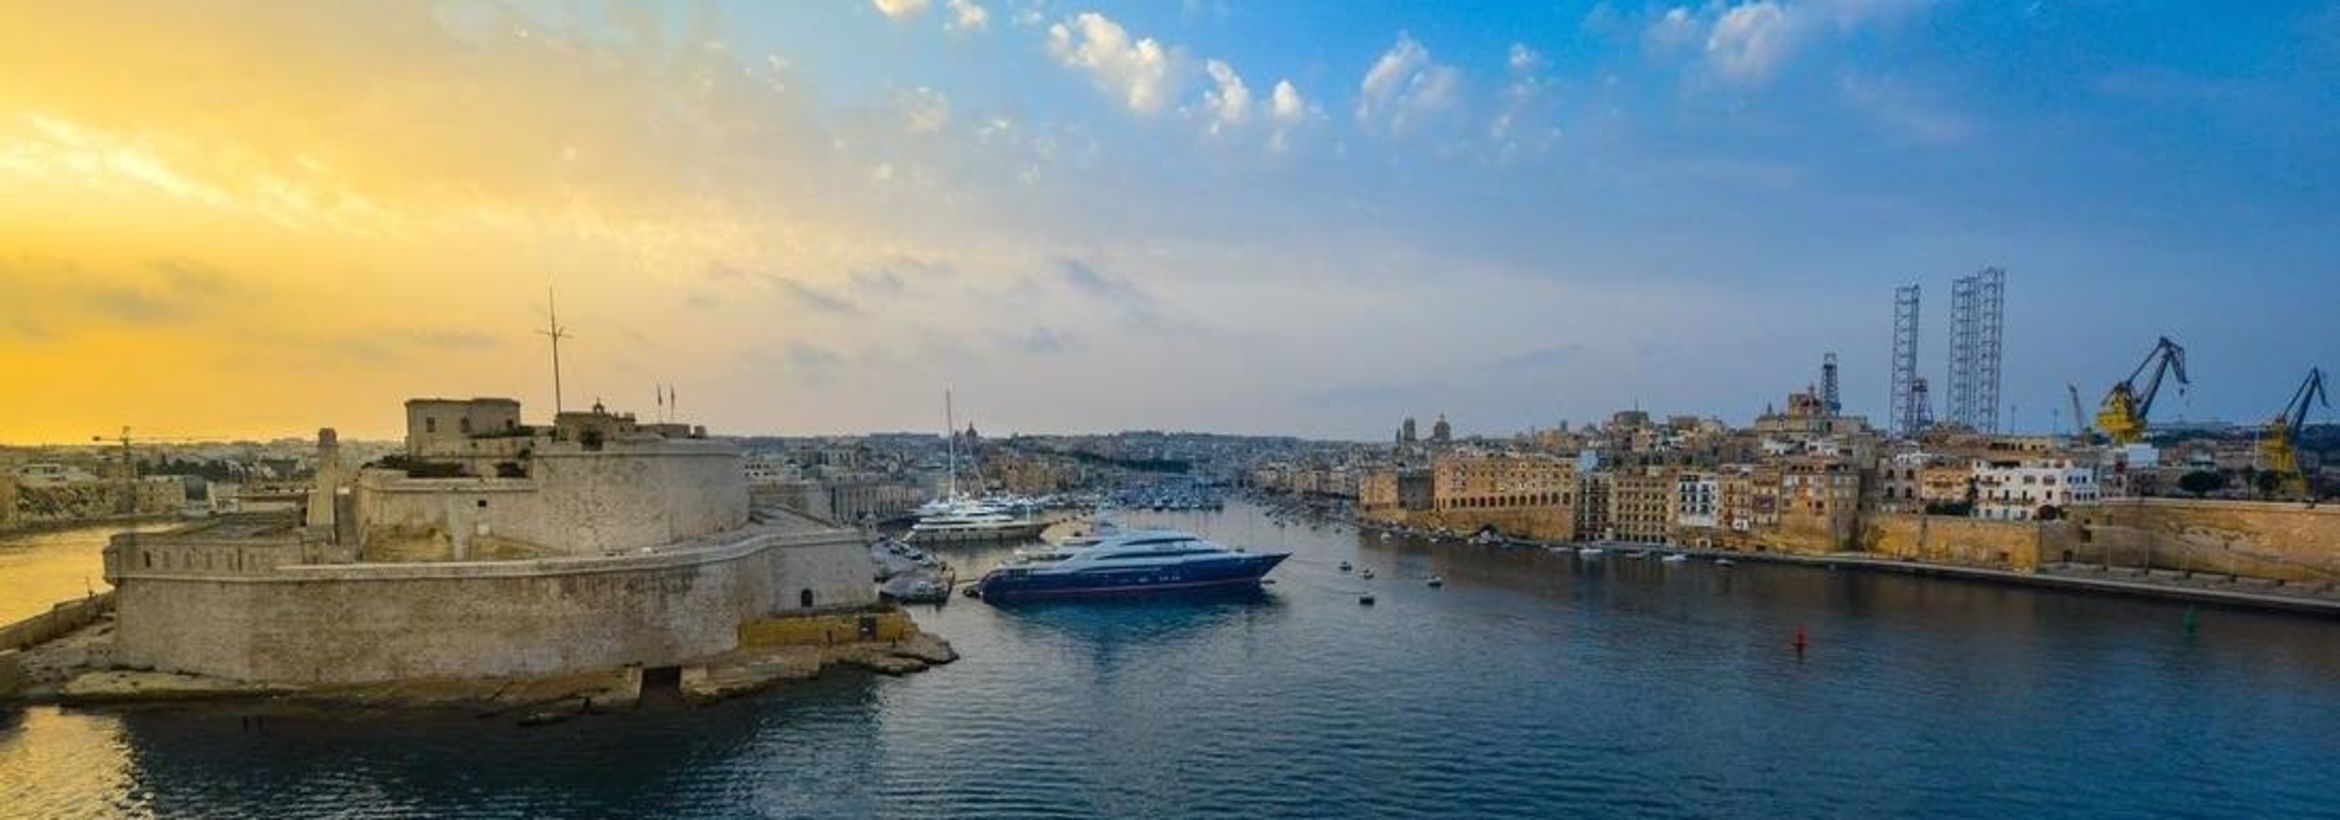 The Monaco Yacht Show 2019